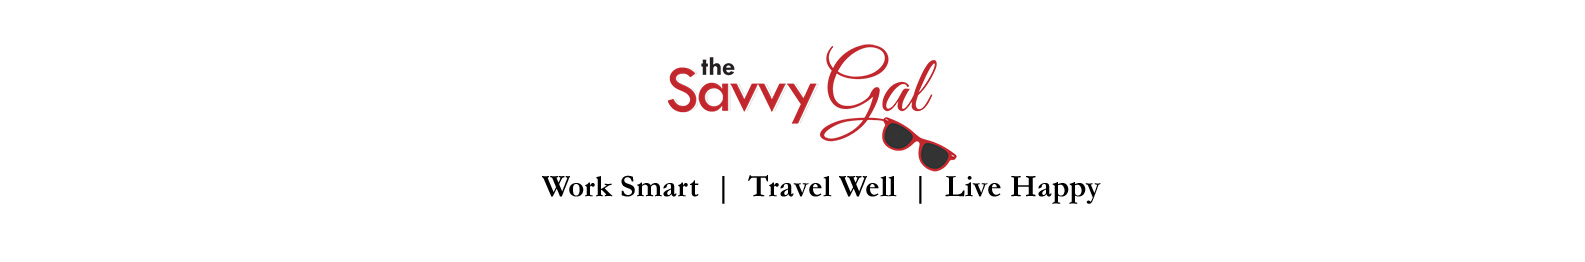 The Savvy Gal